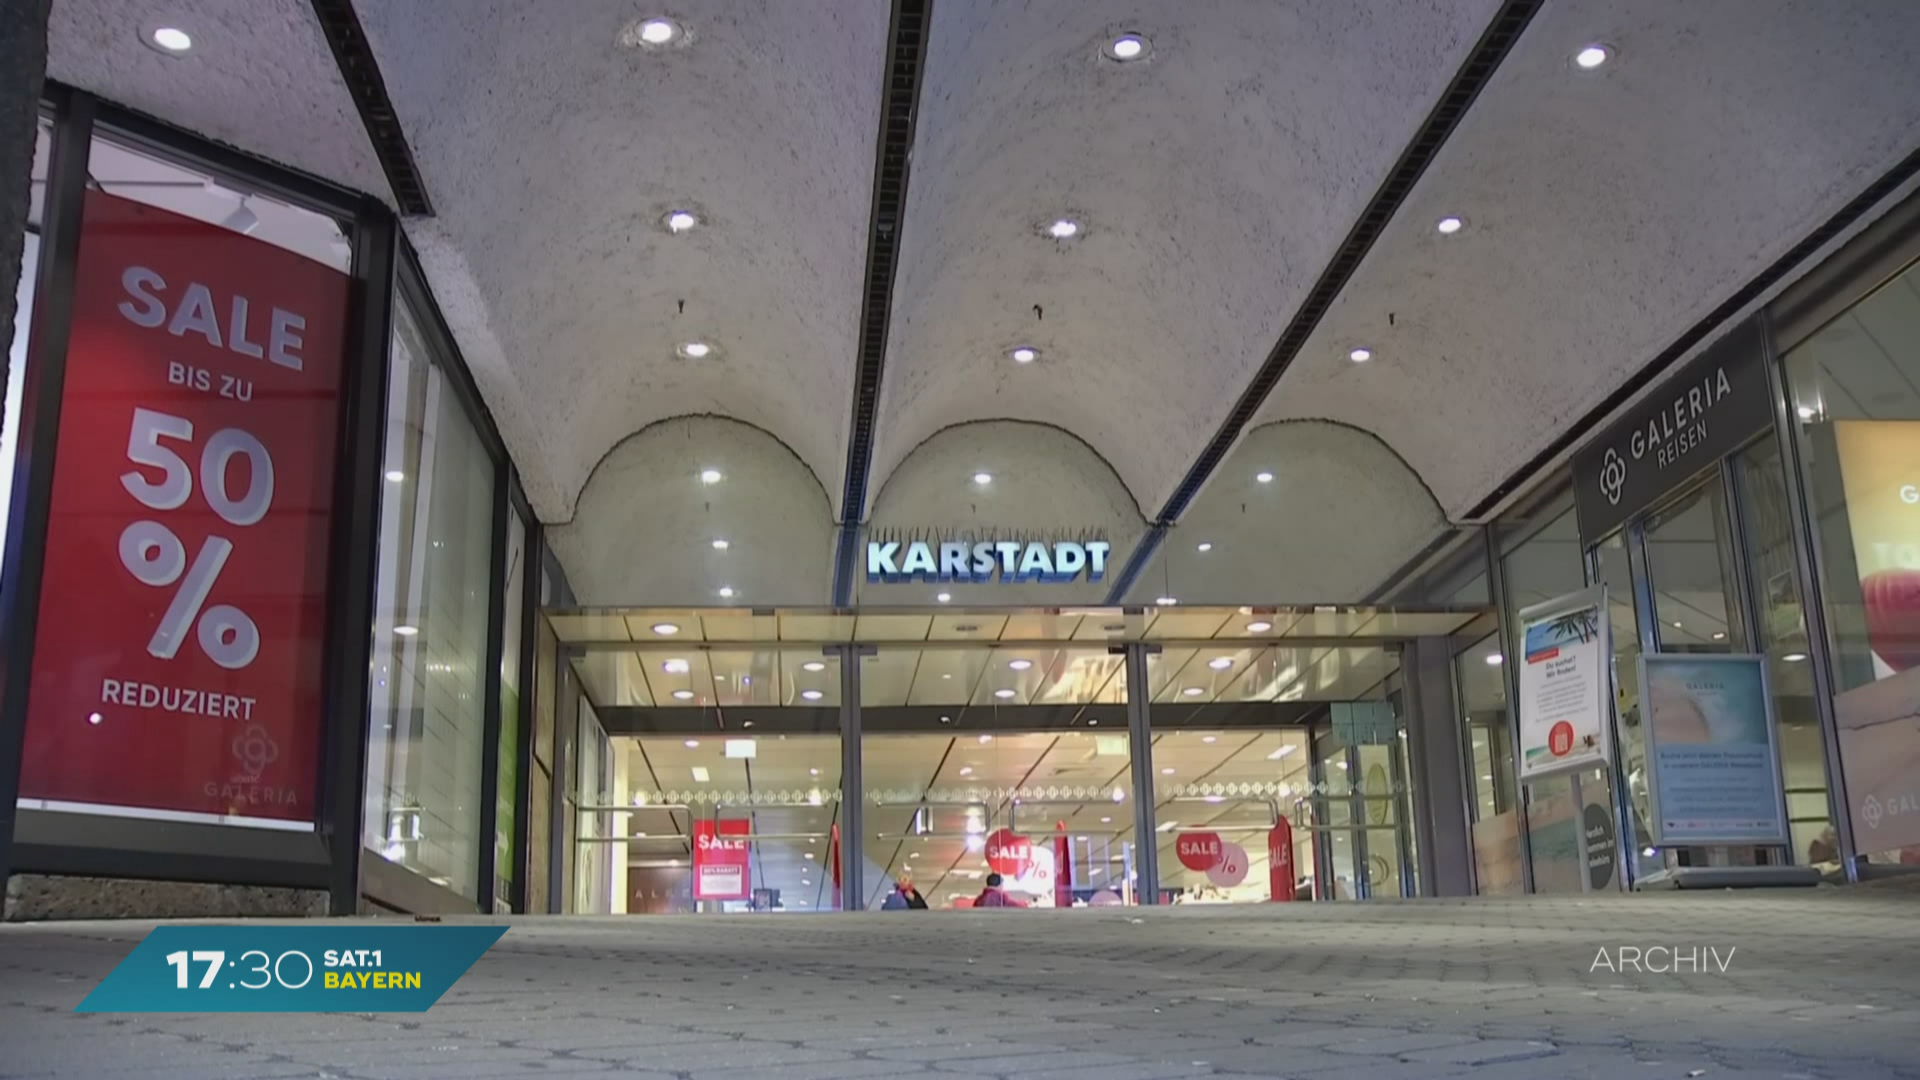 Galeria Karstadt Kaufhof: Department store chain closes 16 stores